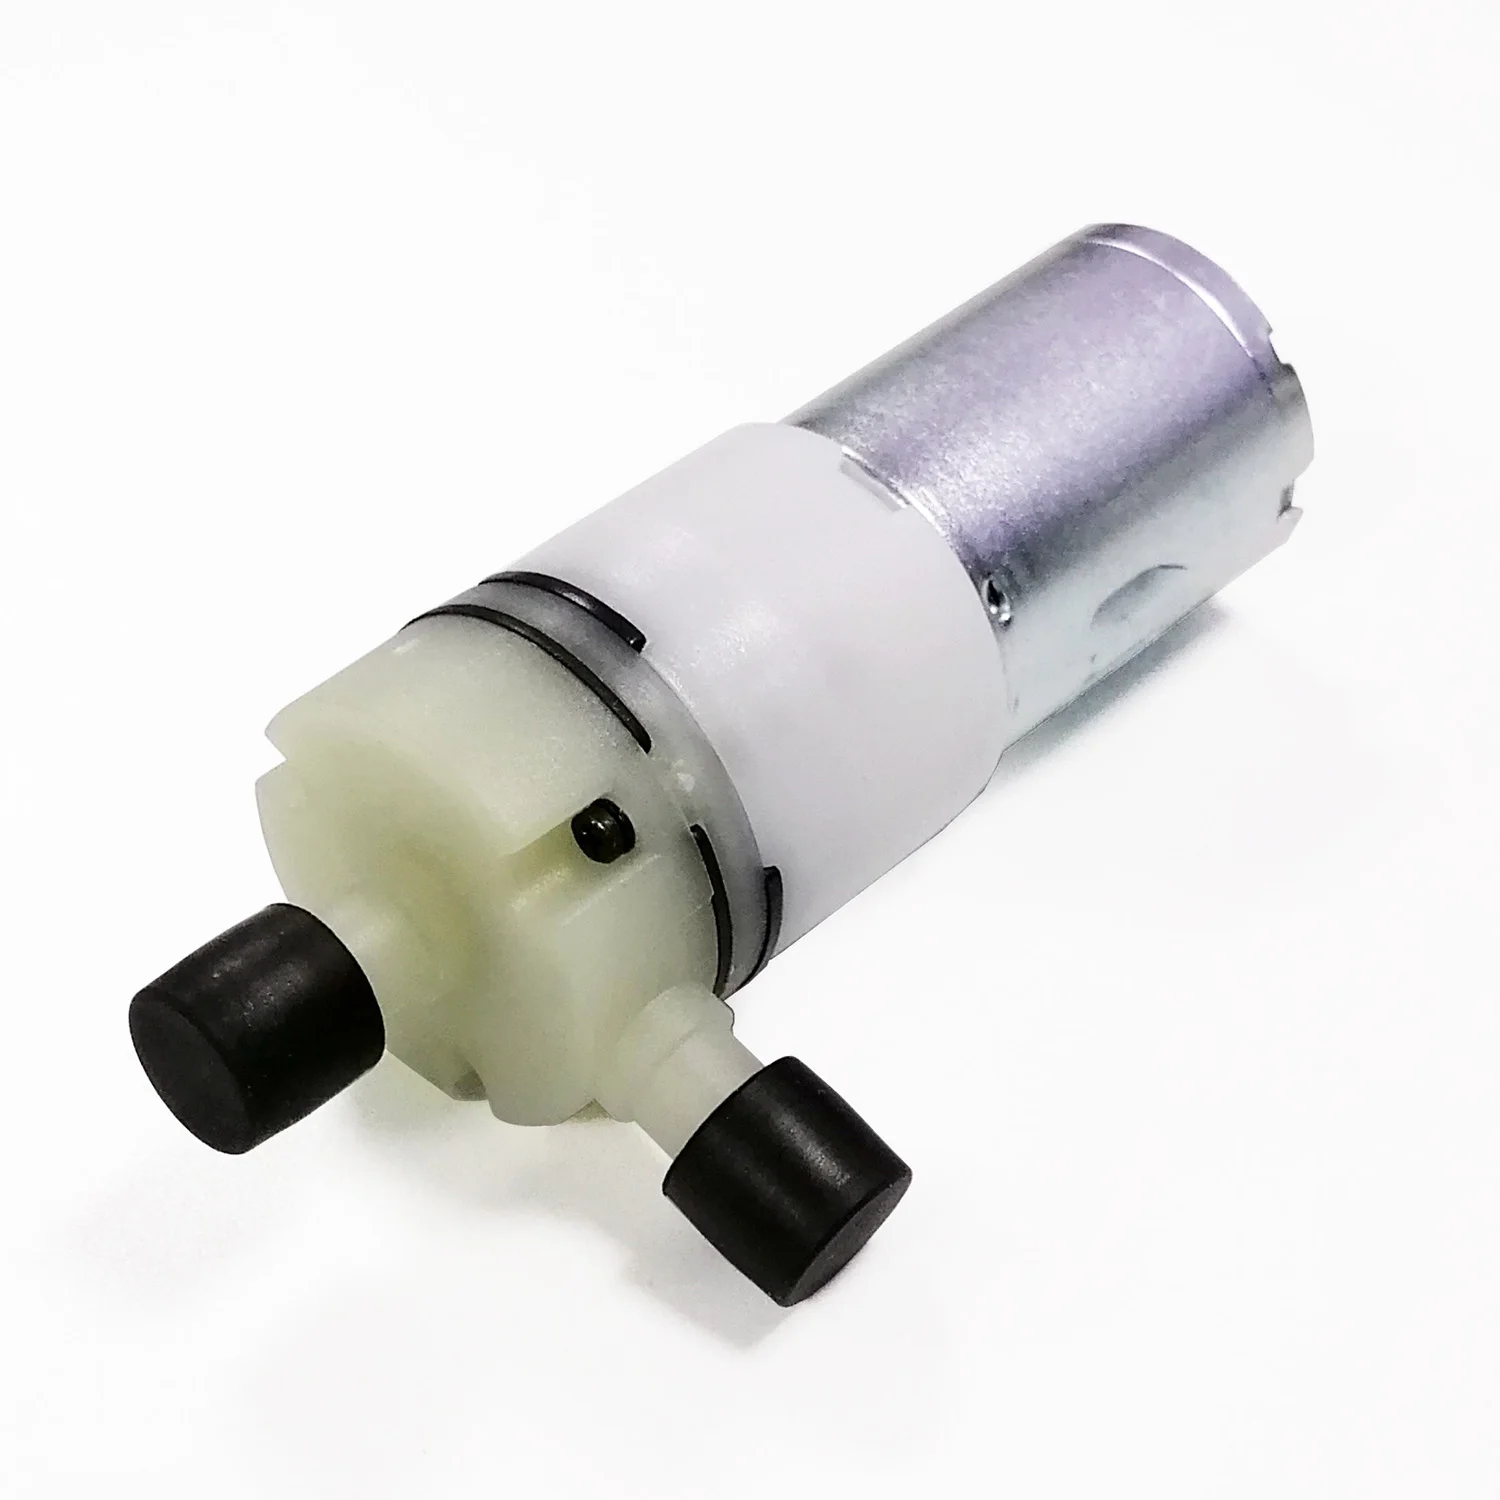 RipengPI Water Pump NA Priming Diaphragm Mini Pump Spray Motor 12V Micro Pumps For Water Dispenser 